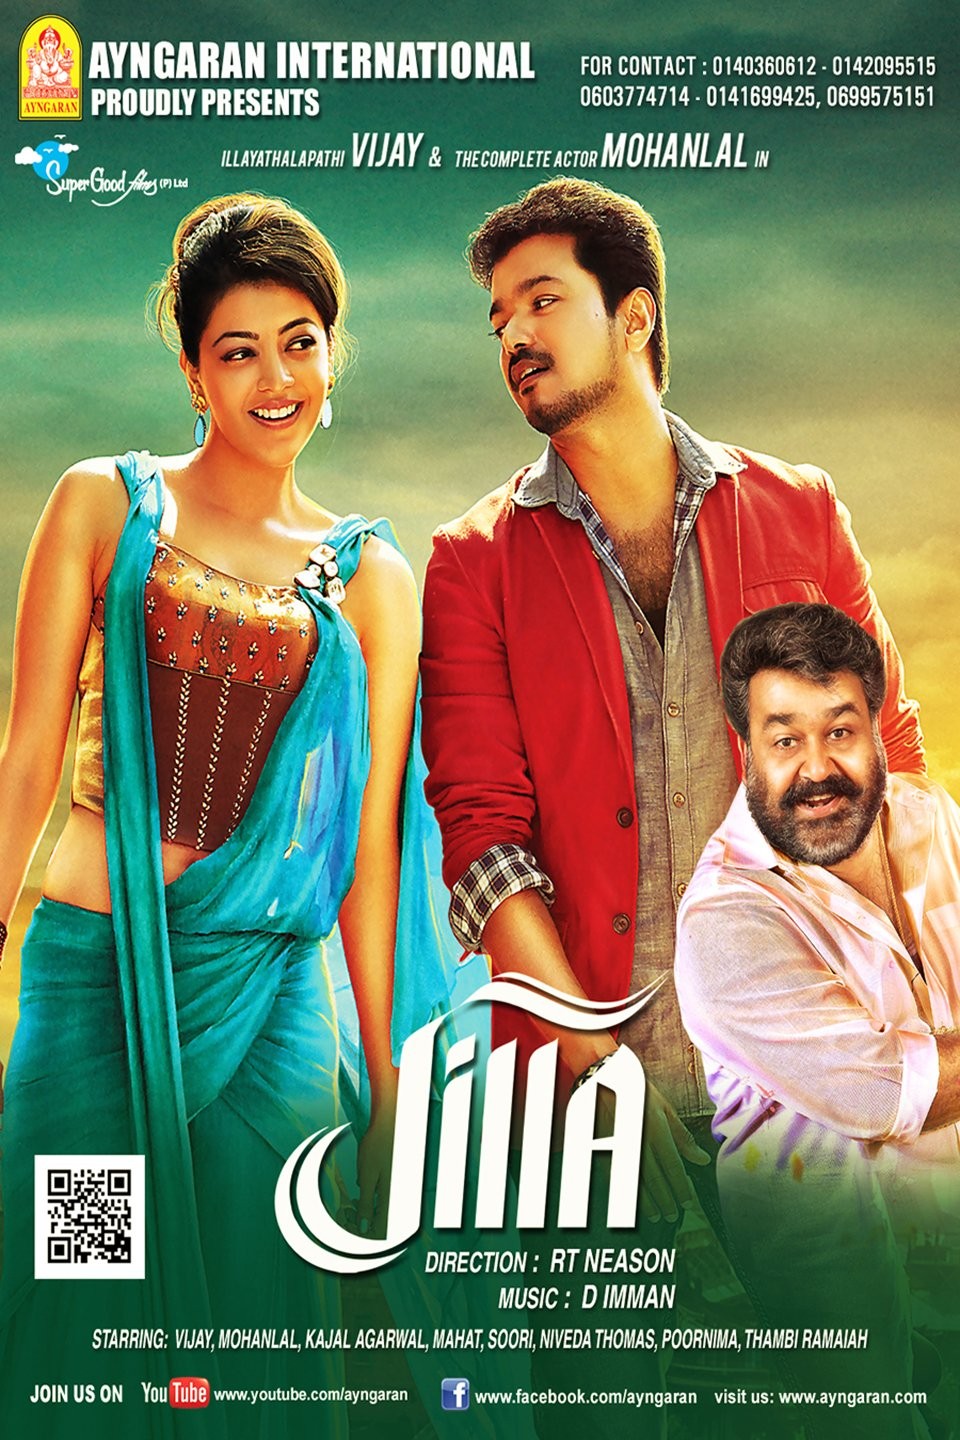 Kumutha happy annachi - Jilla 2014 BluRay HD Tamil Movie Watch Online Watch  @ http://playmovies365.blogspot.com/2015/01/jilla -2014-bluray-hd-tamil-movie-watch.html | Facebook